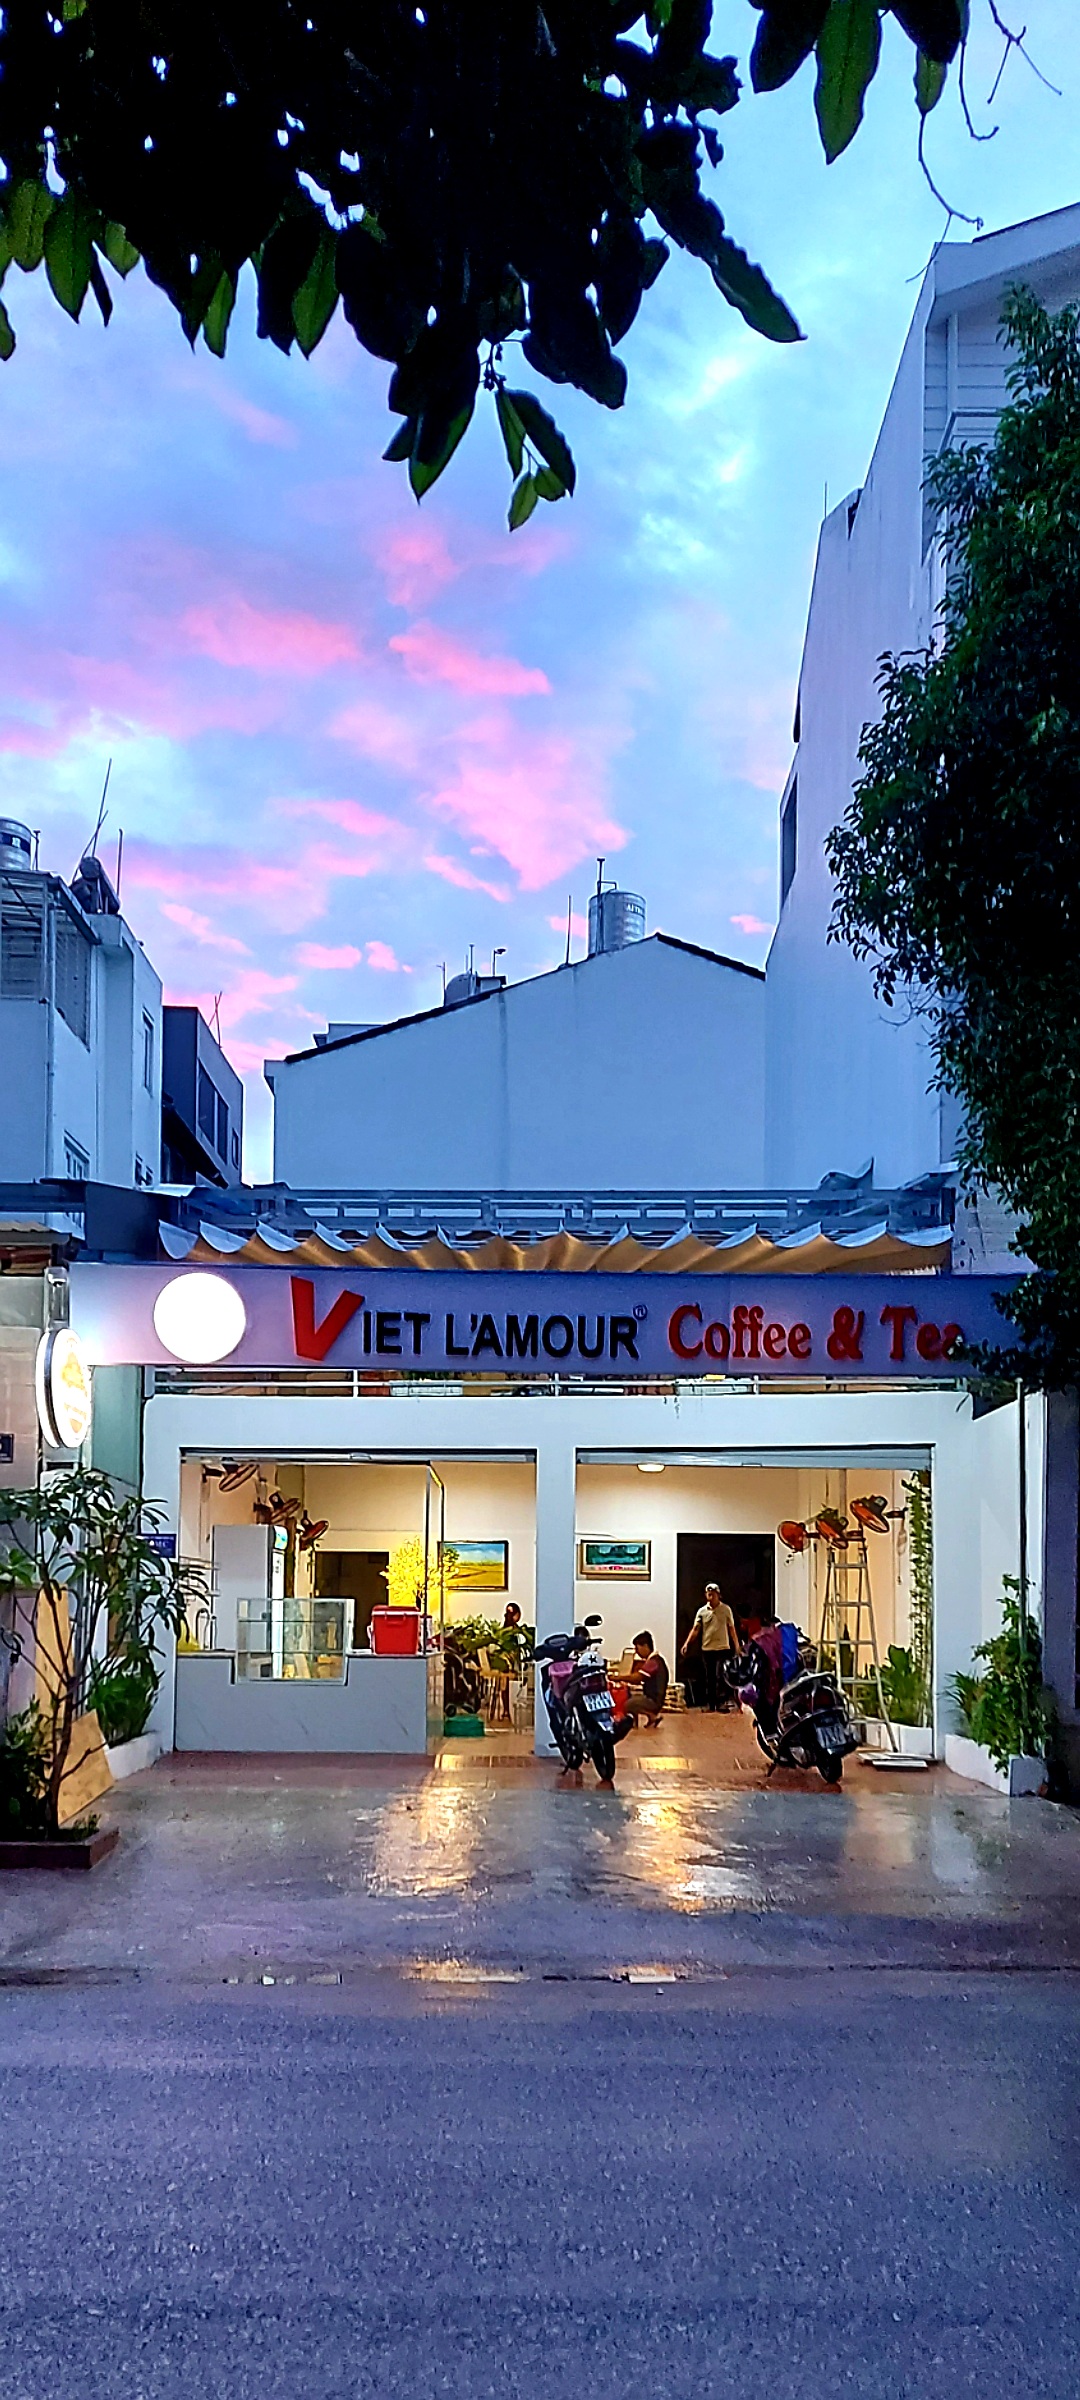 Viet Lamour Coffee & Tea